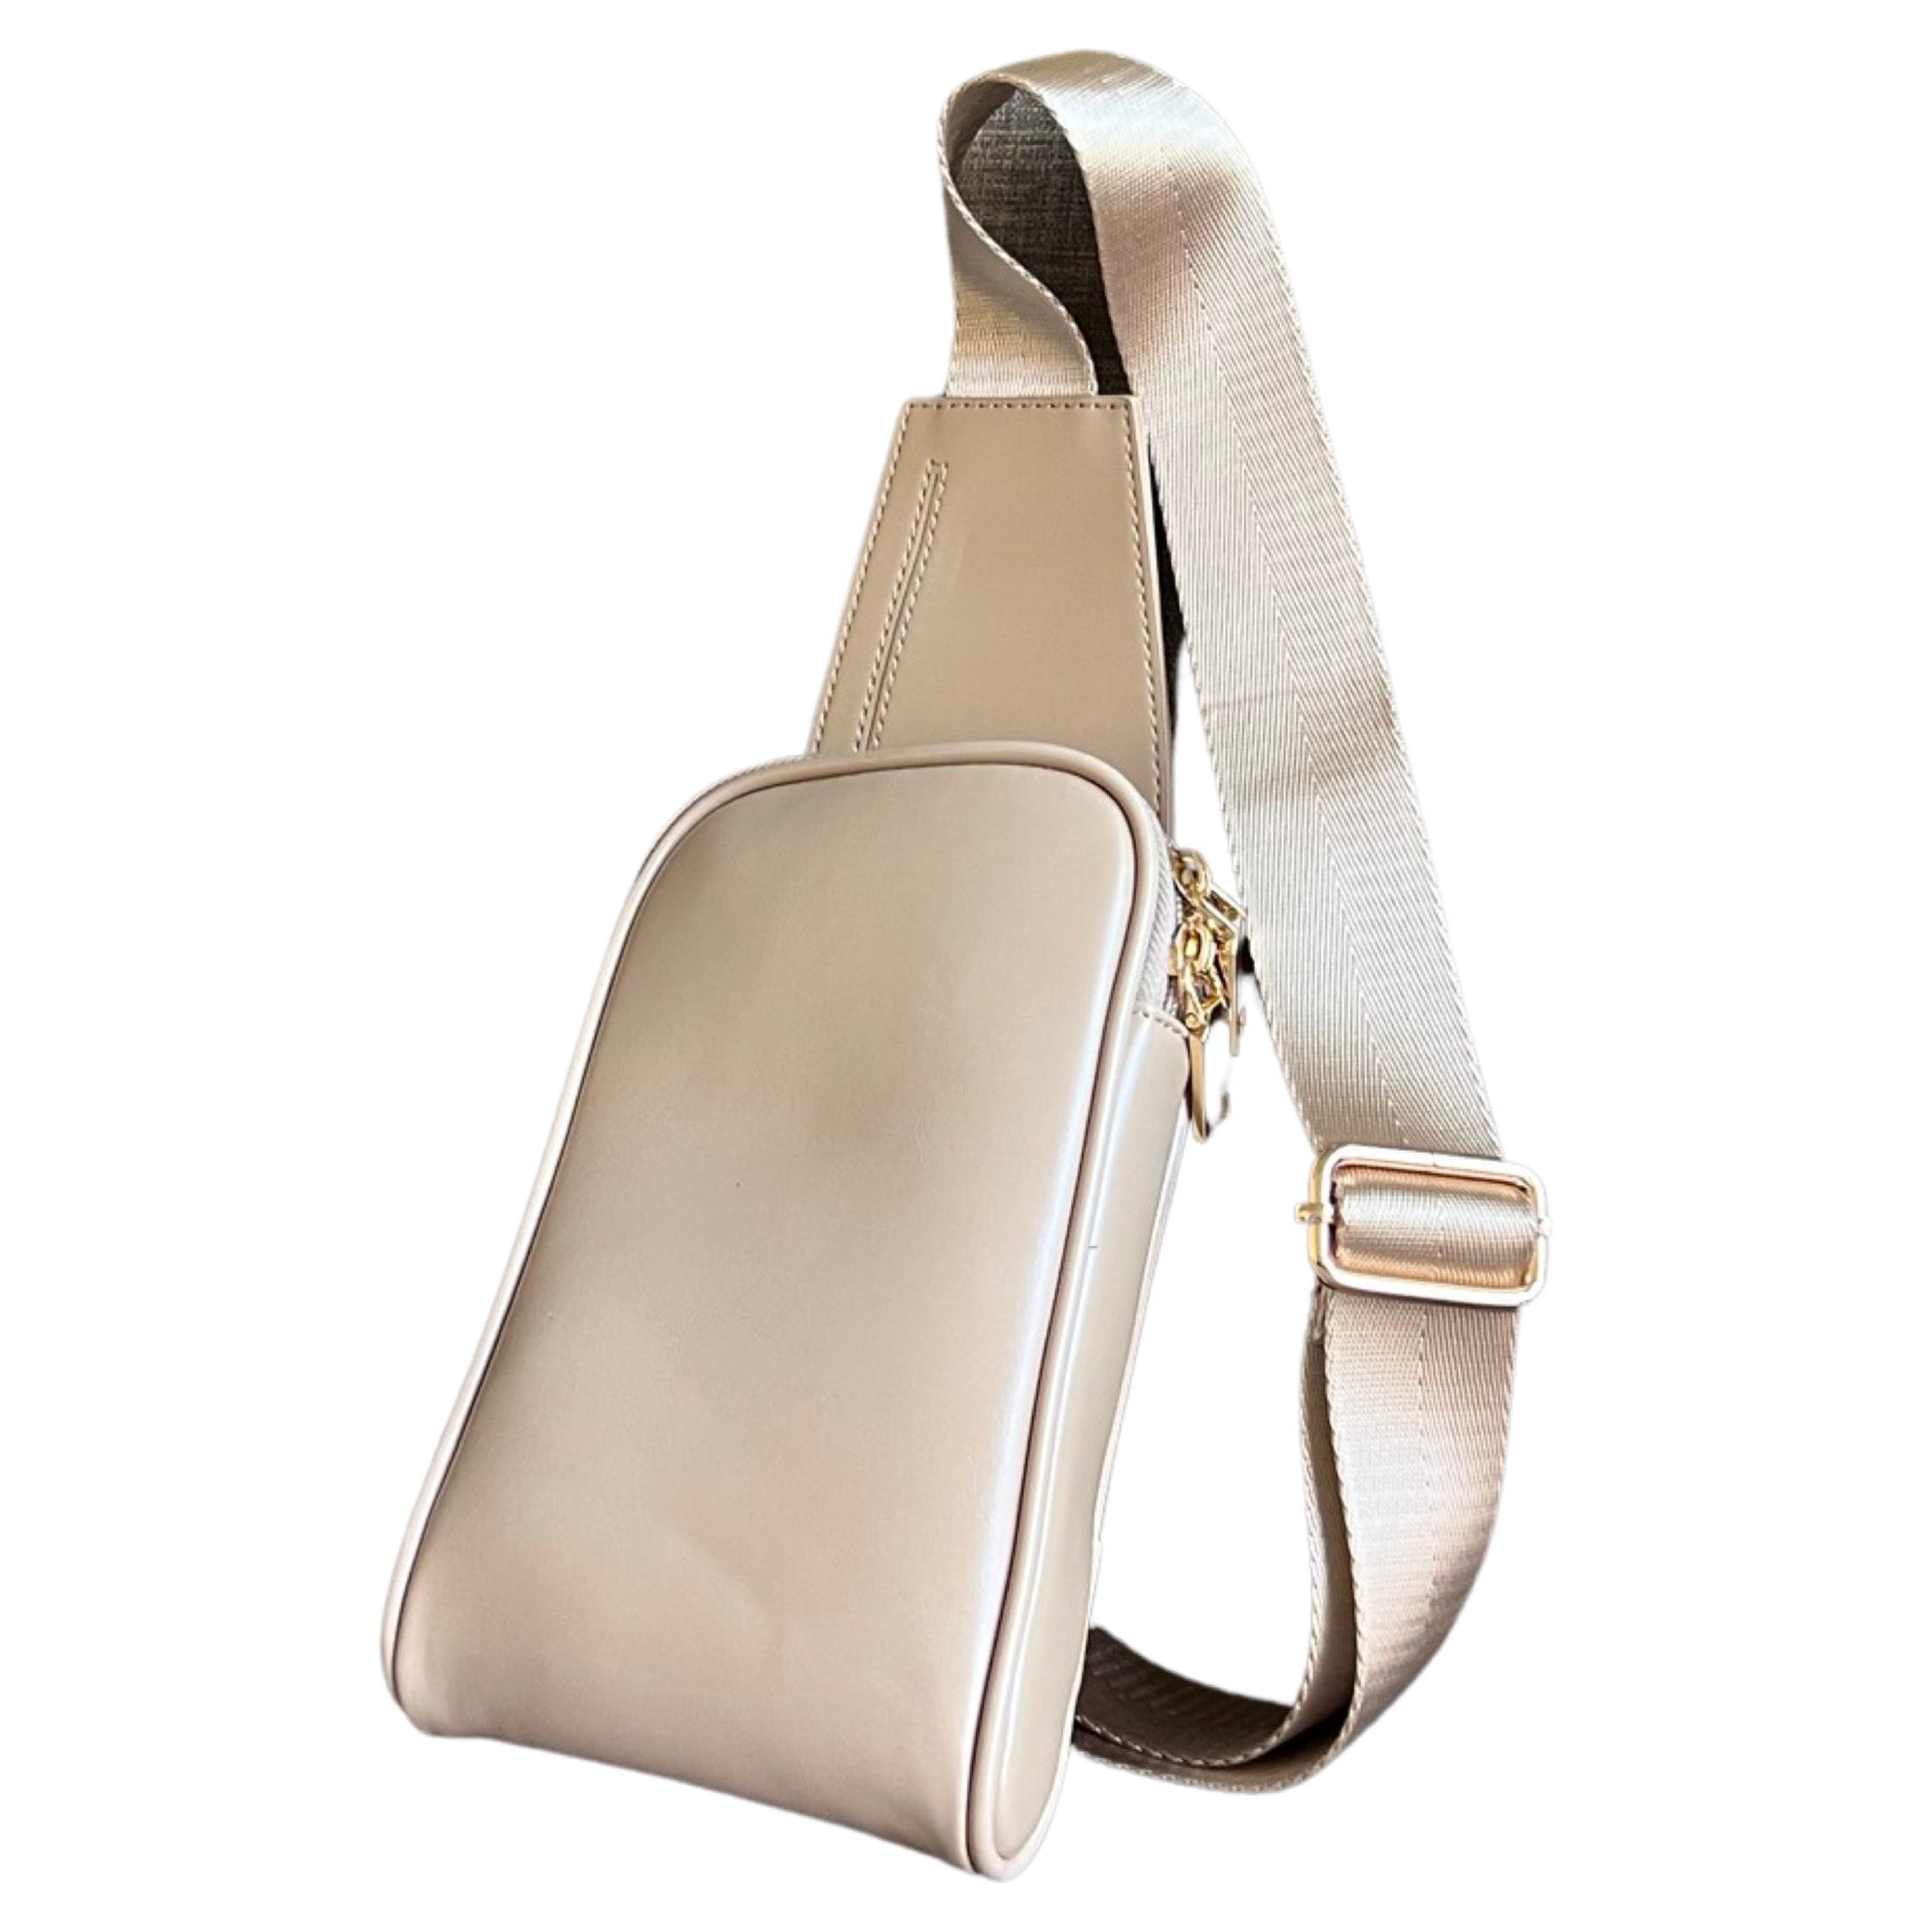 Buy Women's cross body Sling Bag with Flap & Tassel, Adjustable strap -  Beige at